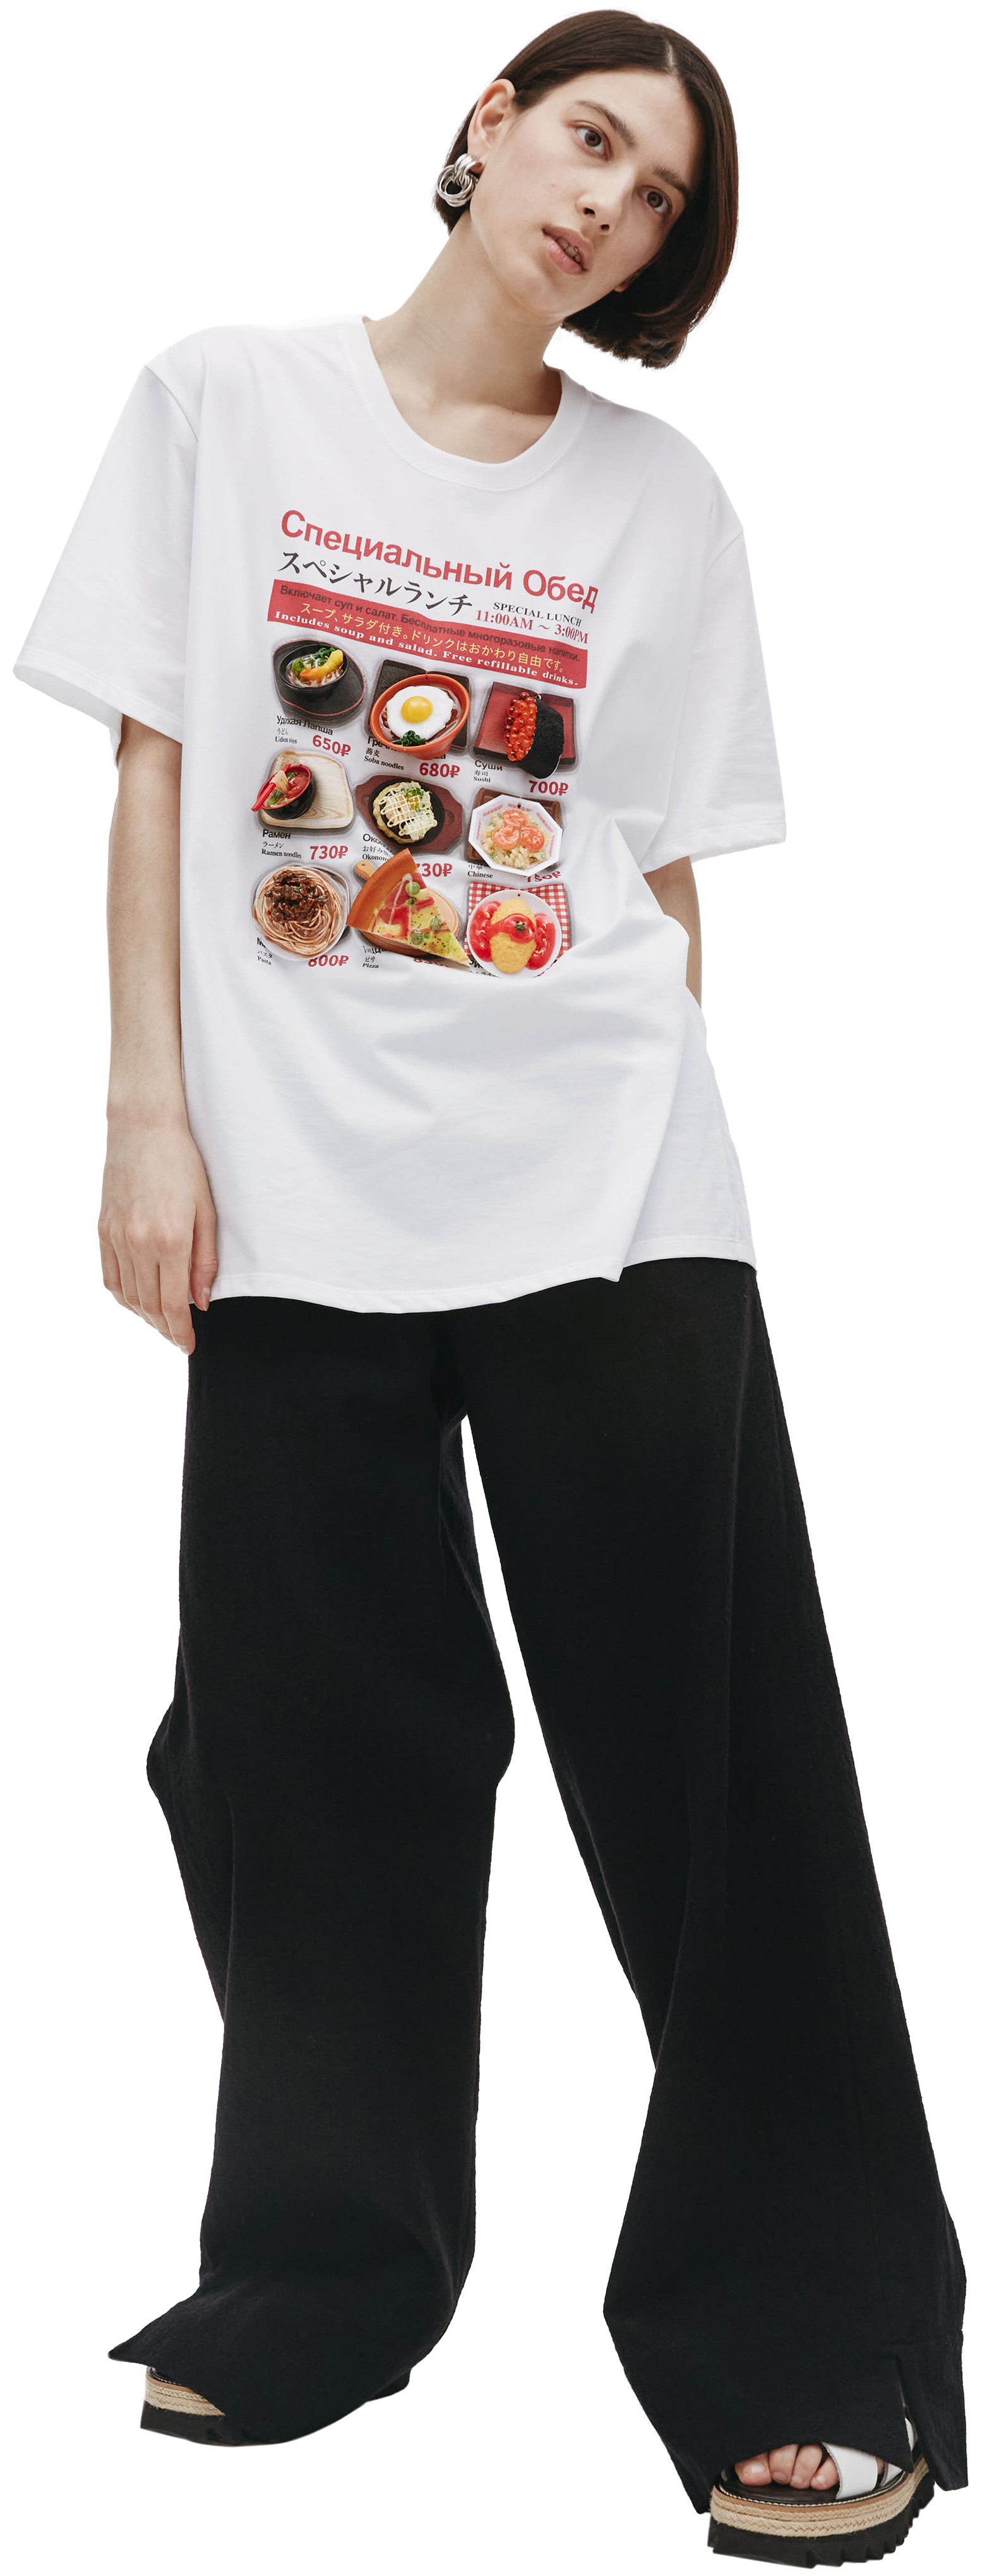 Buy Doublet women white doublet x sv t-shirt for $445 online on 